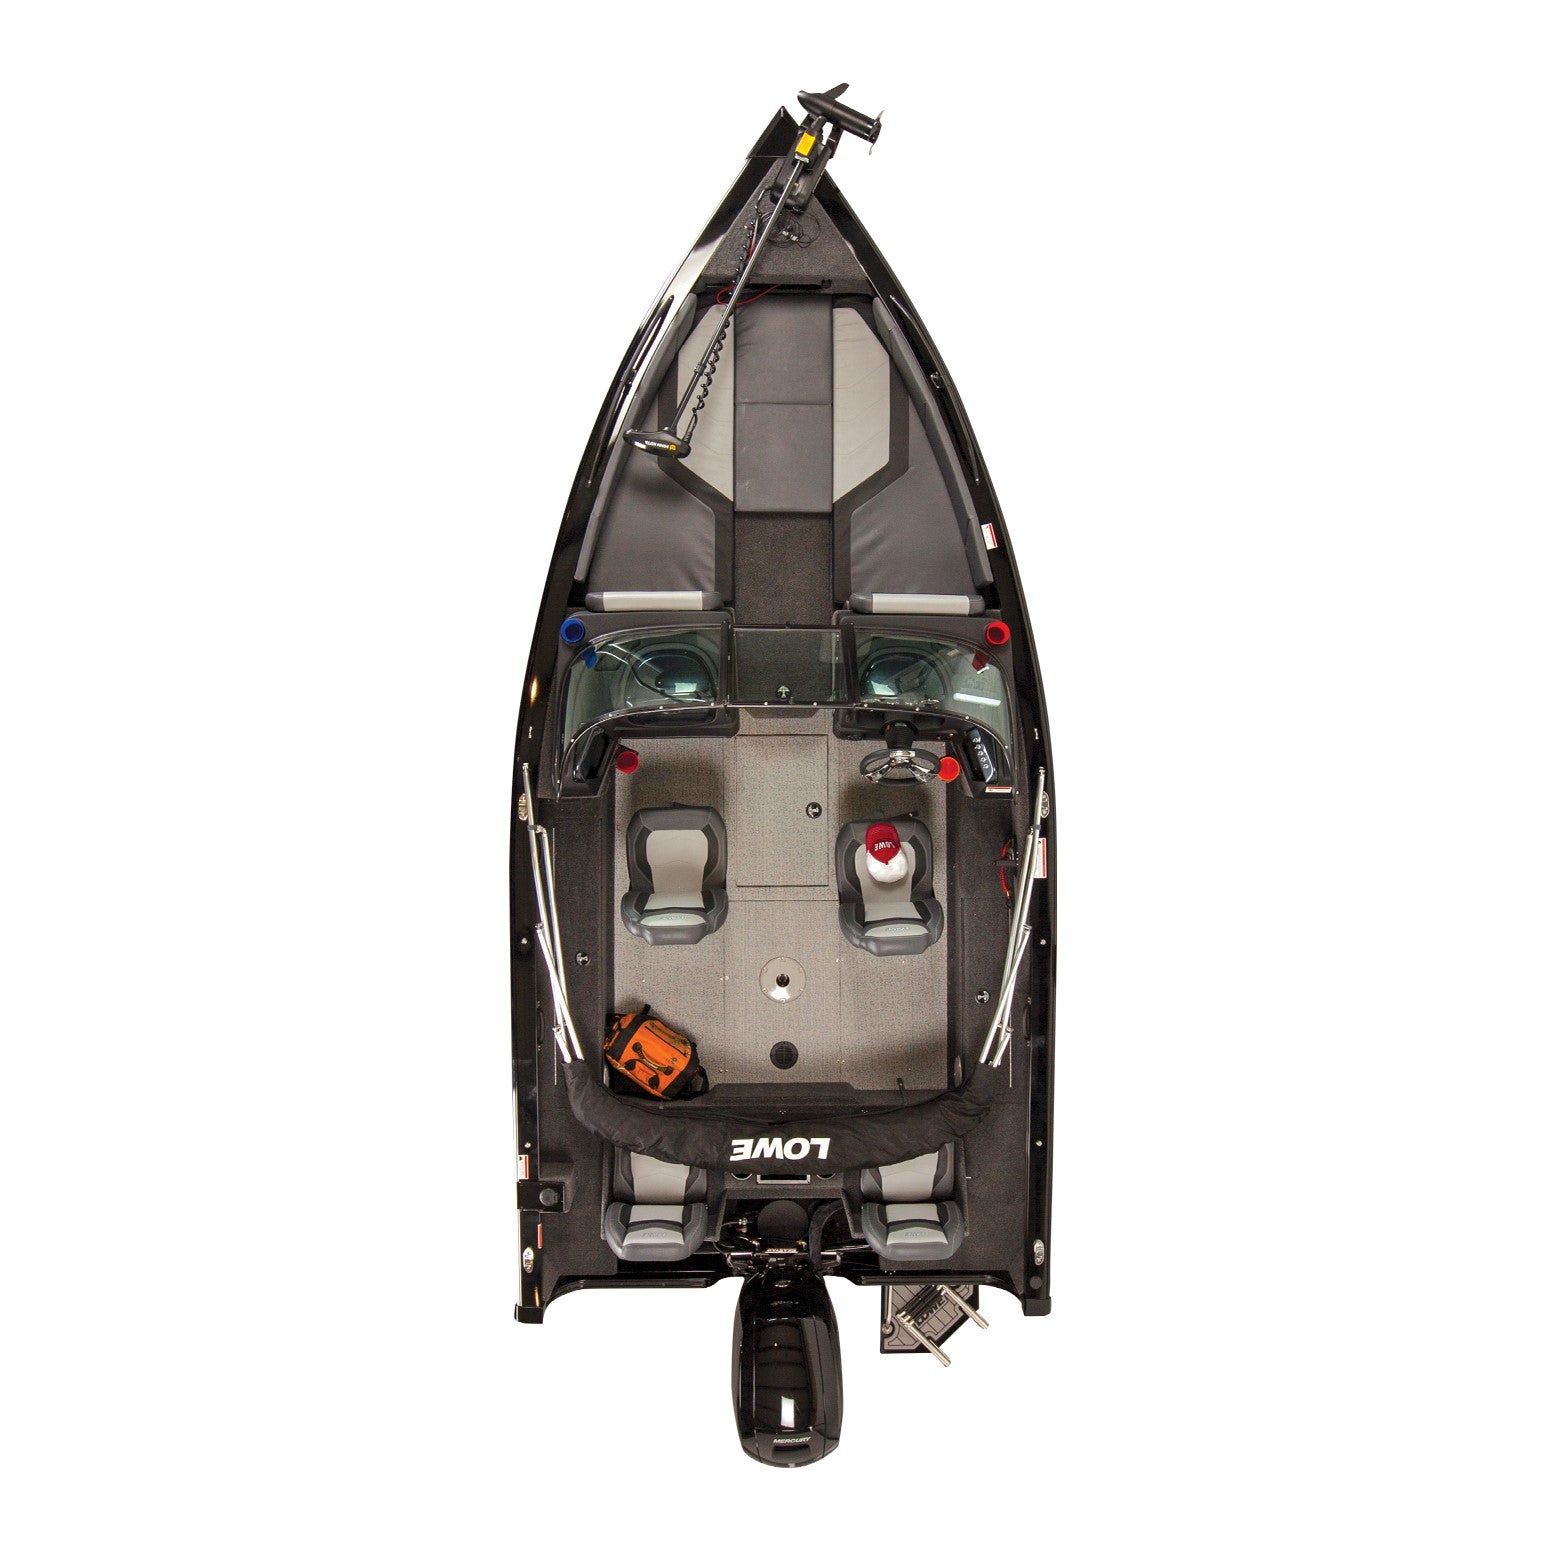 Boat Rental - 2020 18' Lowe Fishing Machine 150 HP